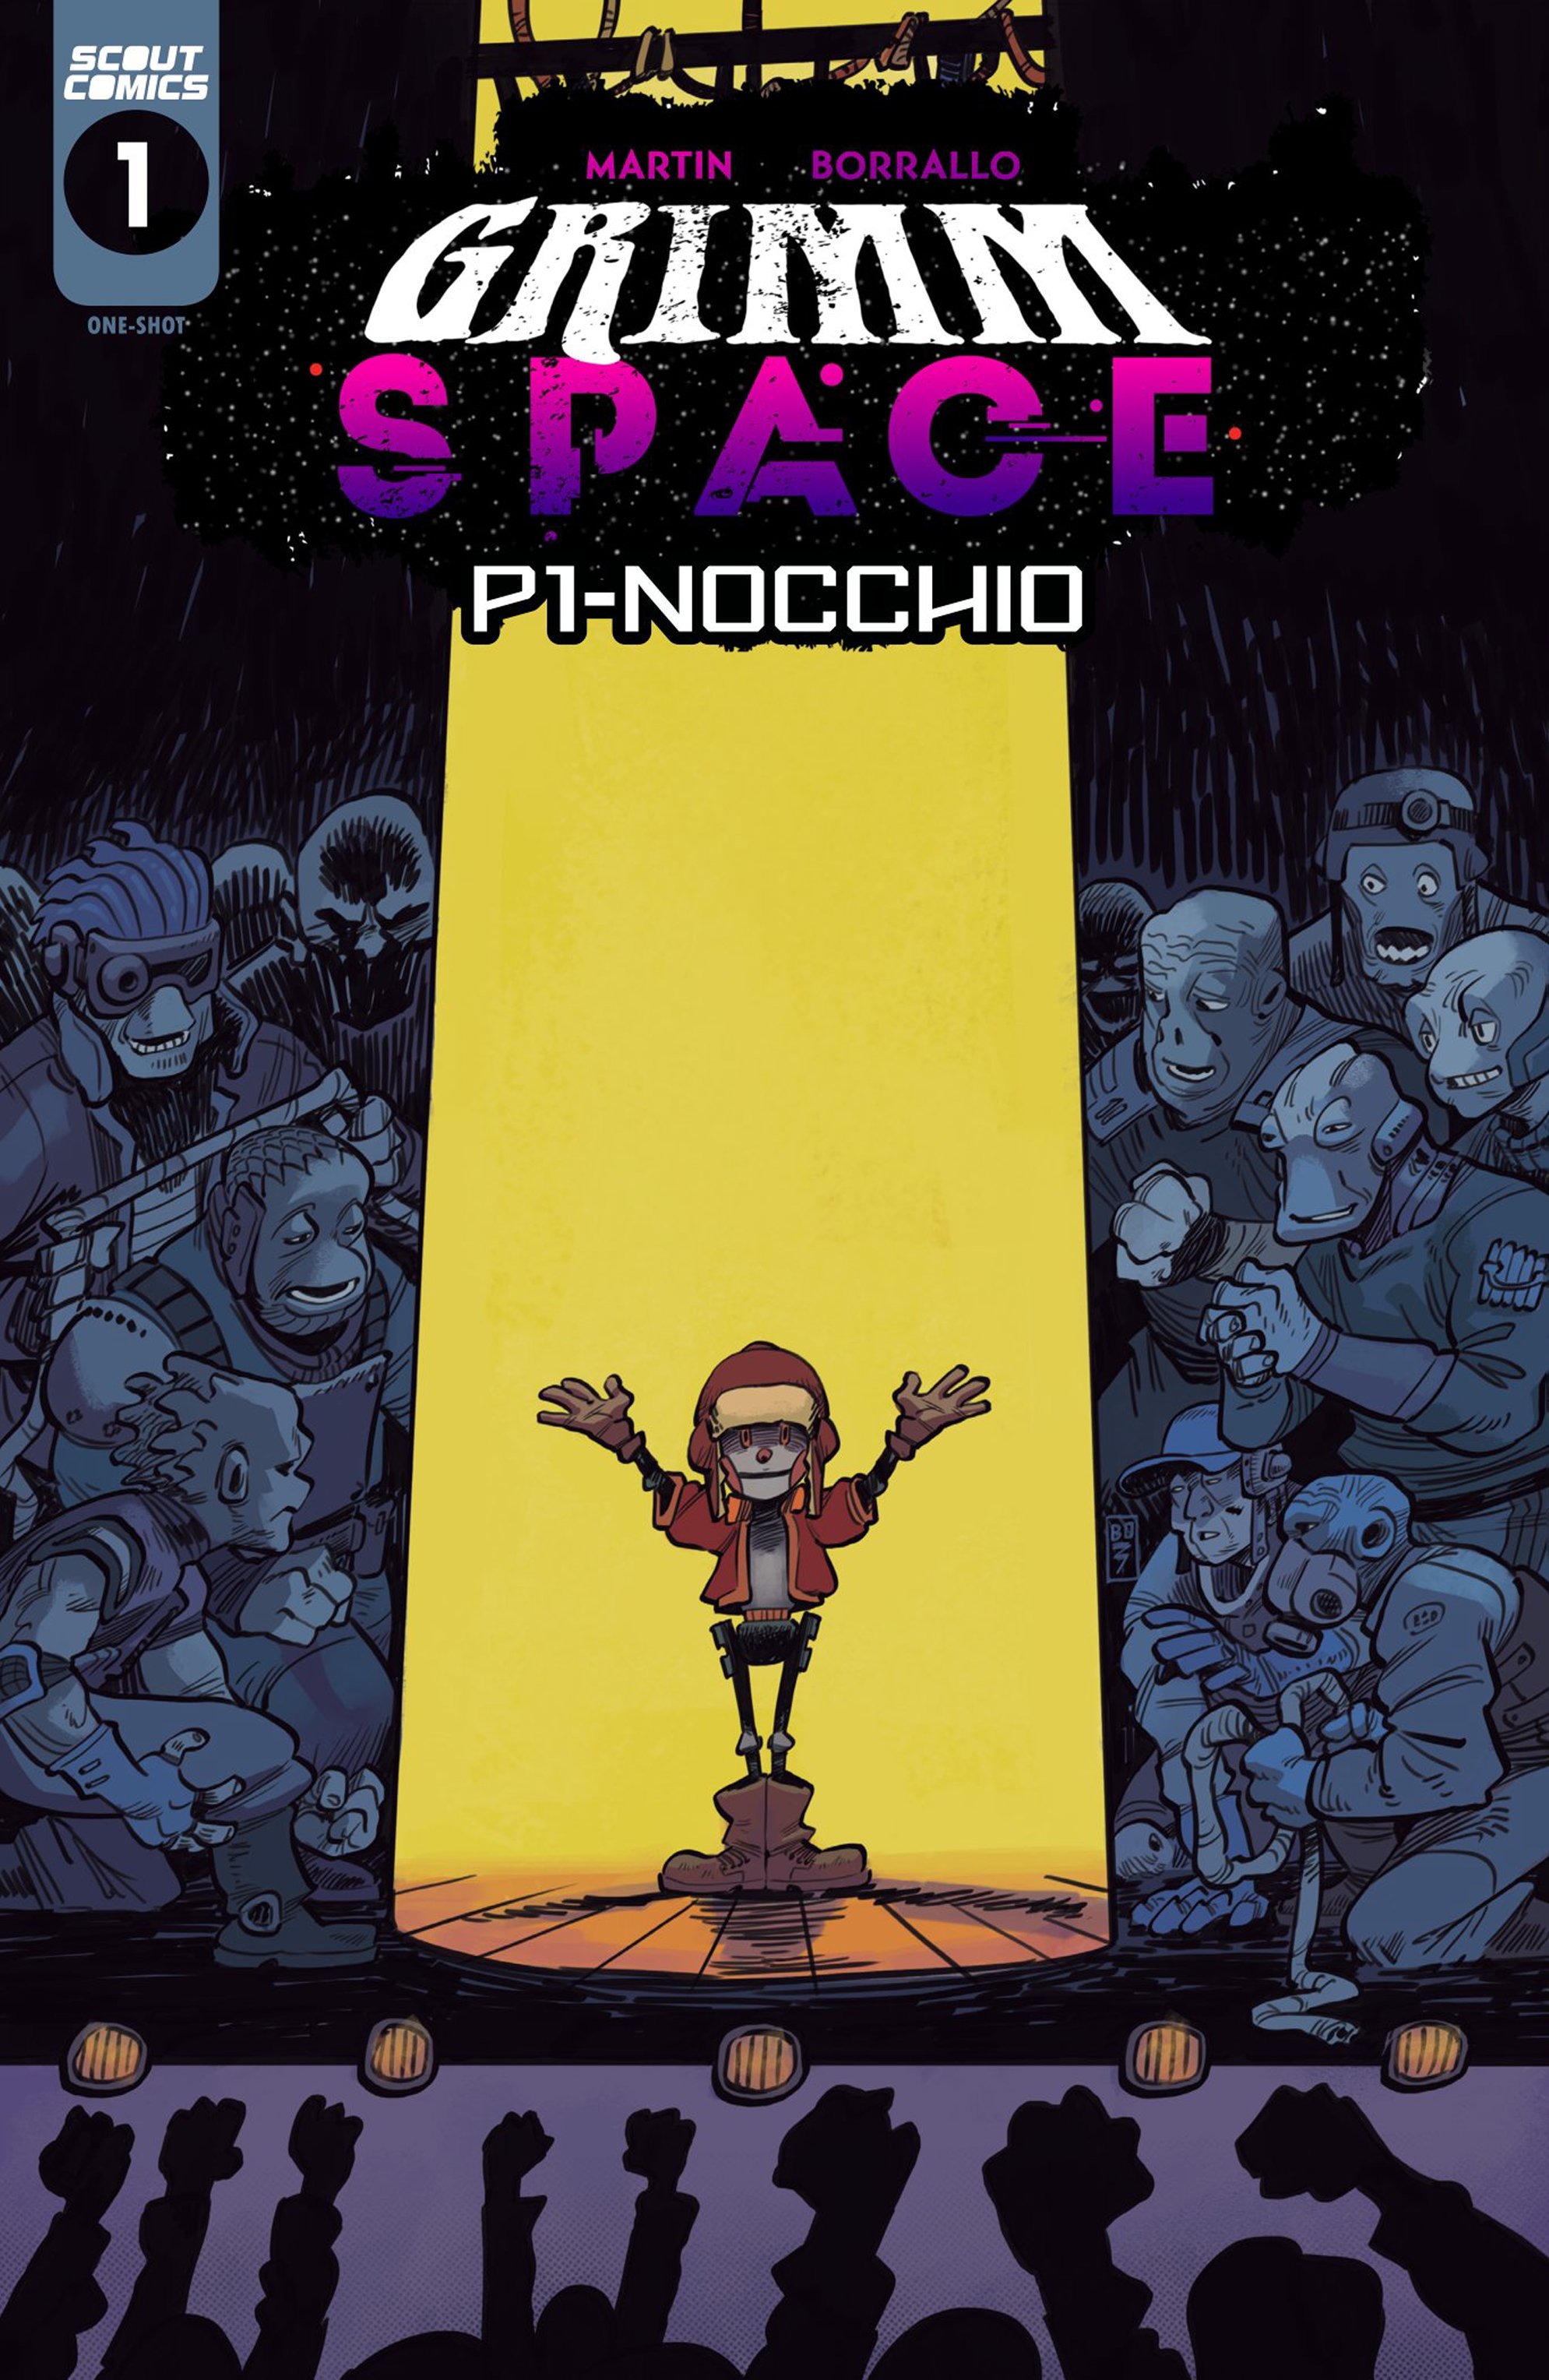 Read online Grimm Space P1-Nocchio comic -  Issue # Full - 1